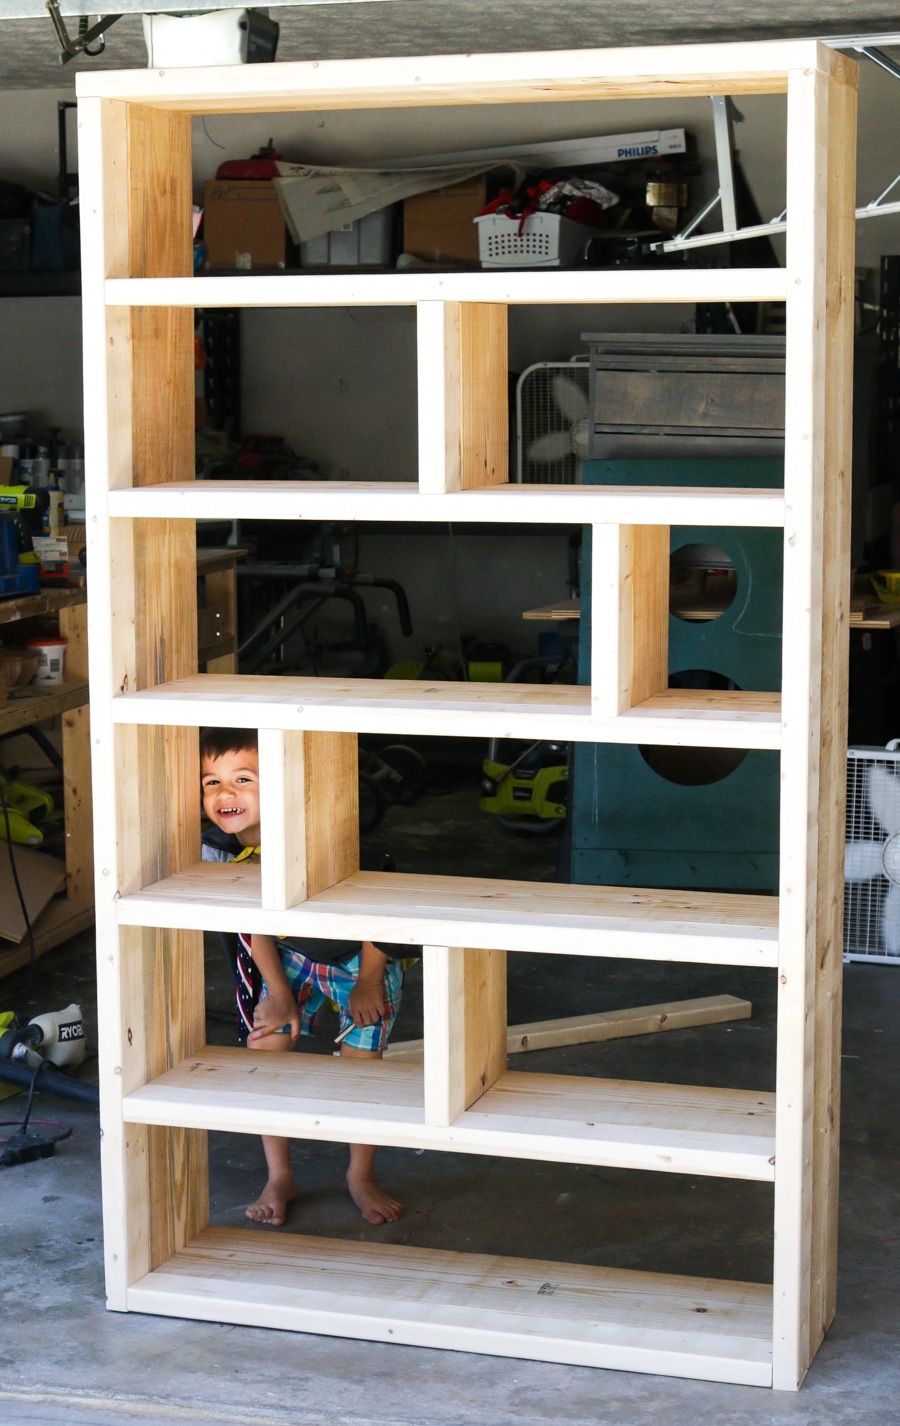 Diy Bookshelf Creative Ways to Build Your Own Stylish Book Storage